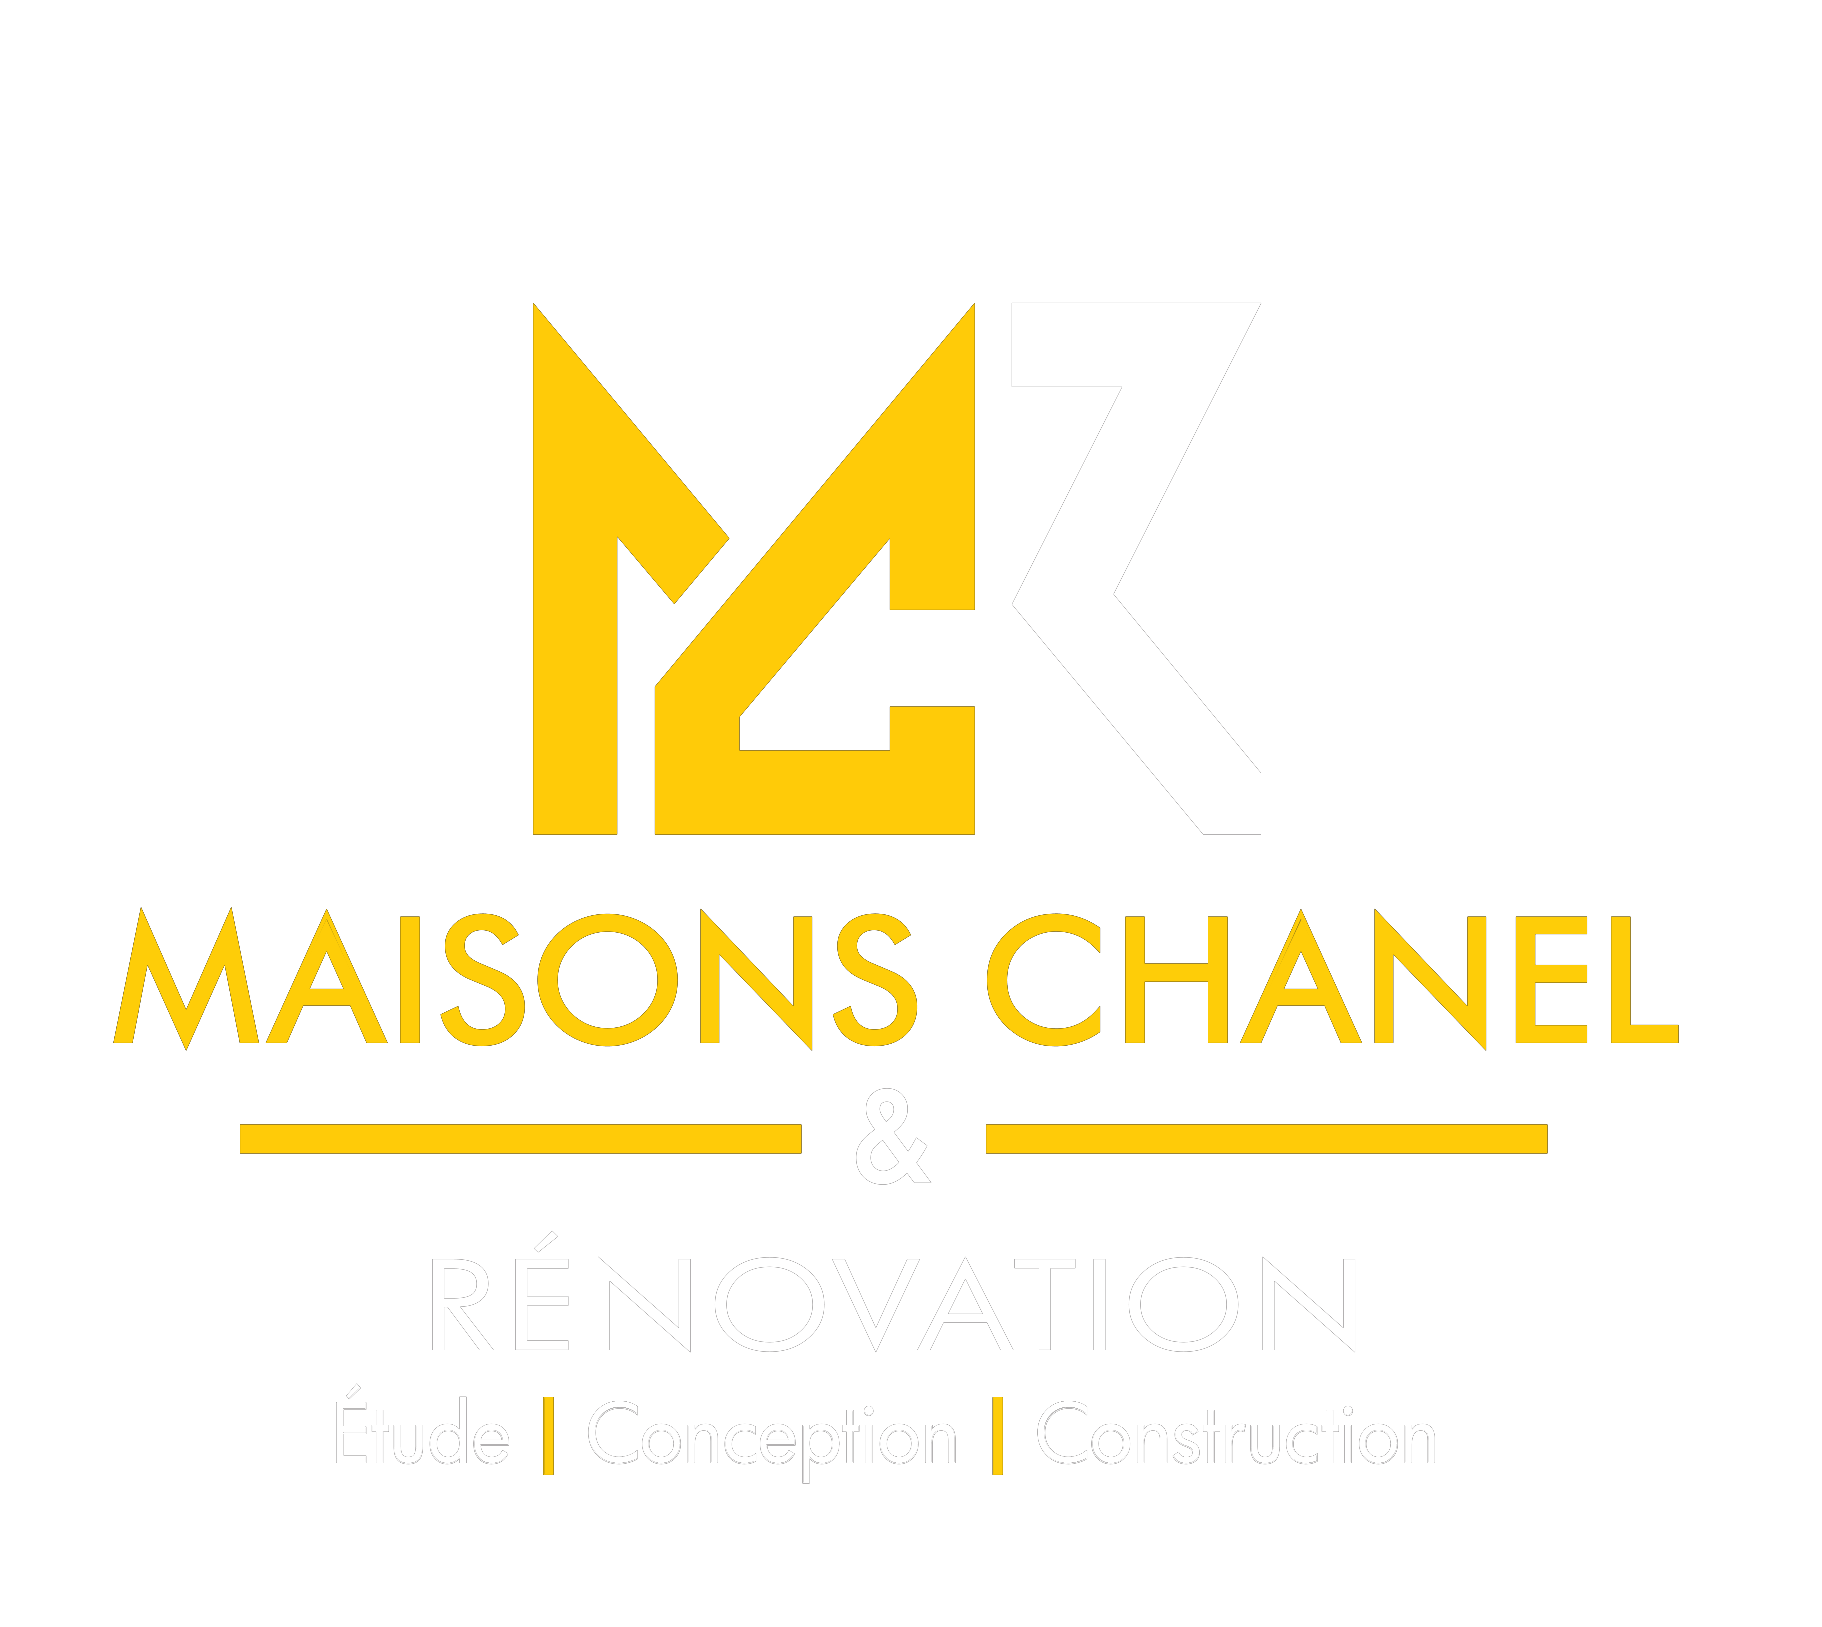 Maison Chanel & Rénovation